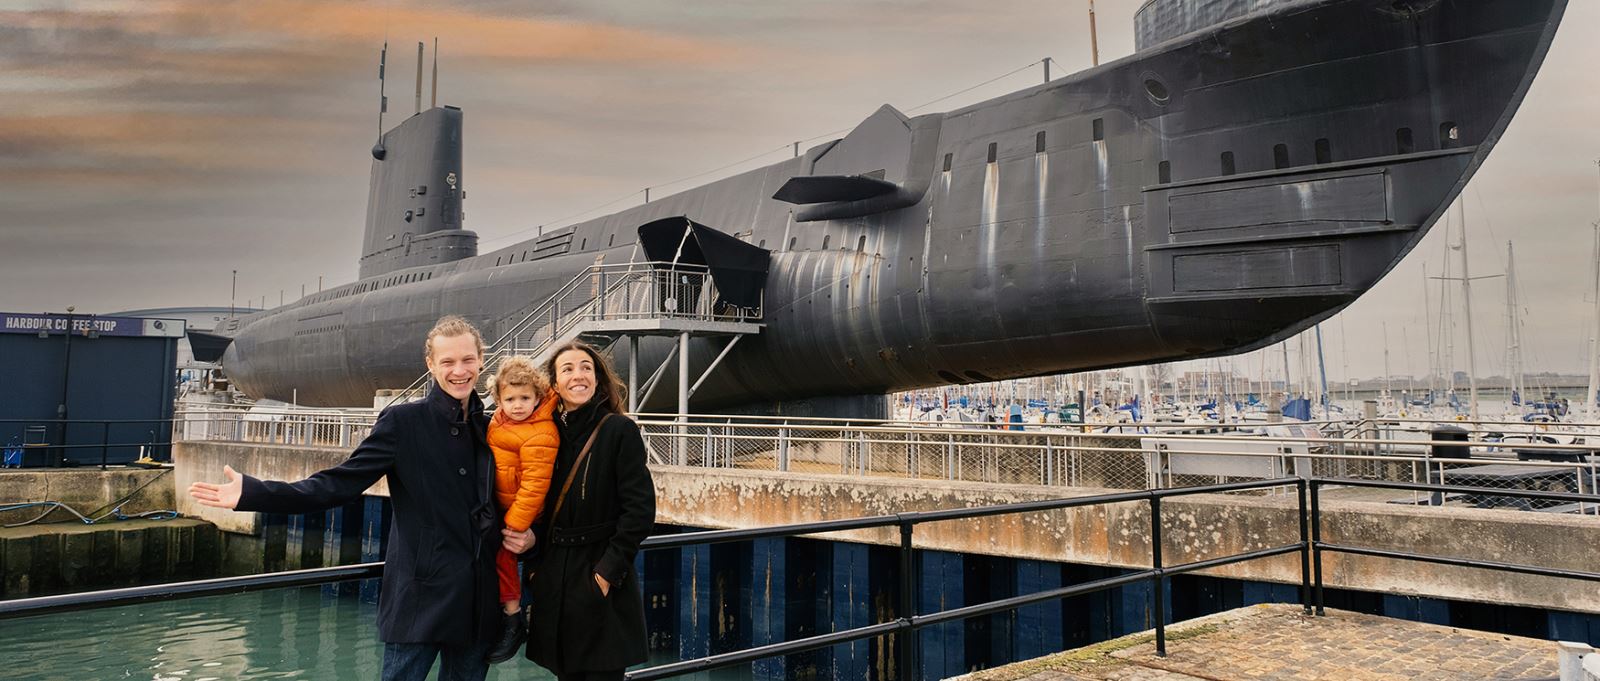 Royal Navy Submarine Museum, Gosport, Hampshire